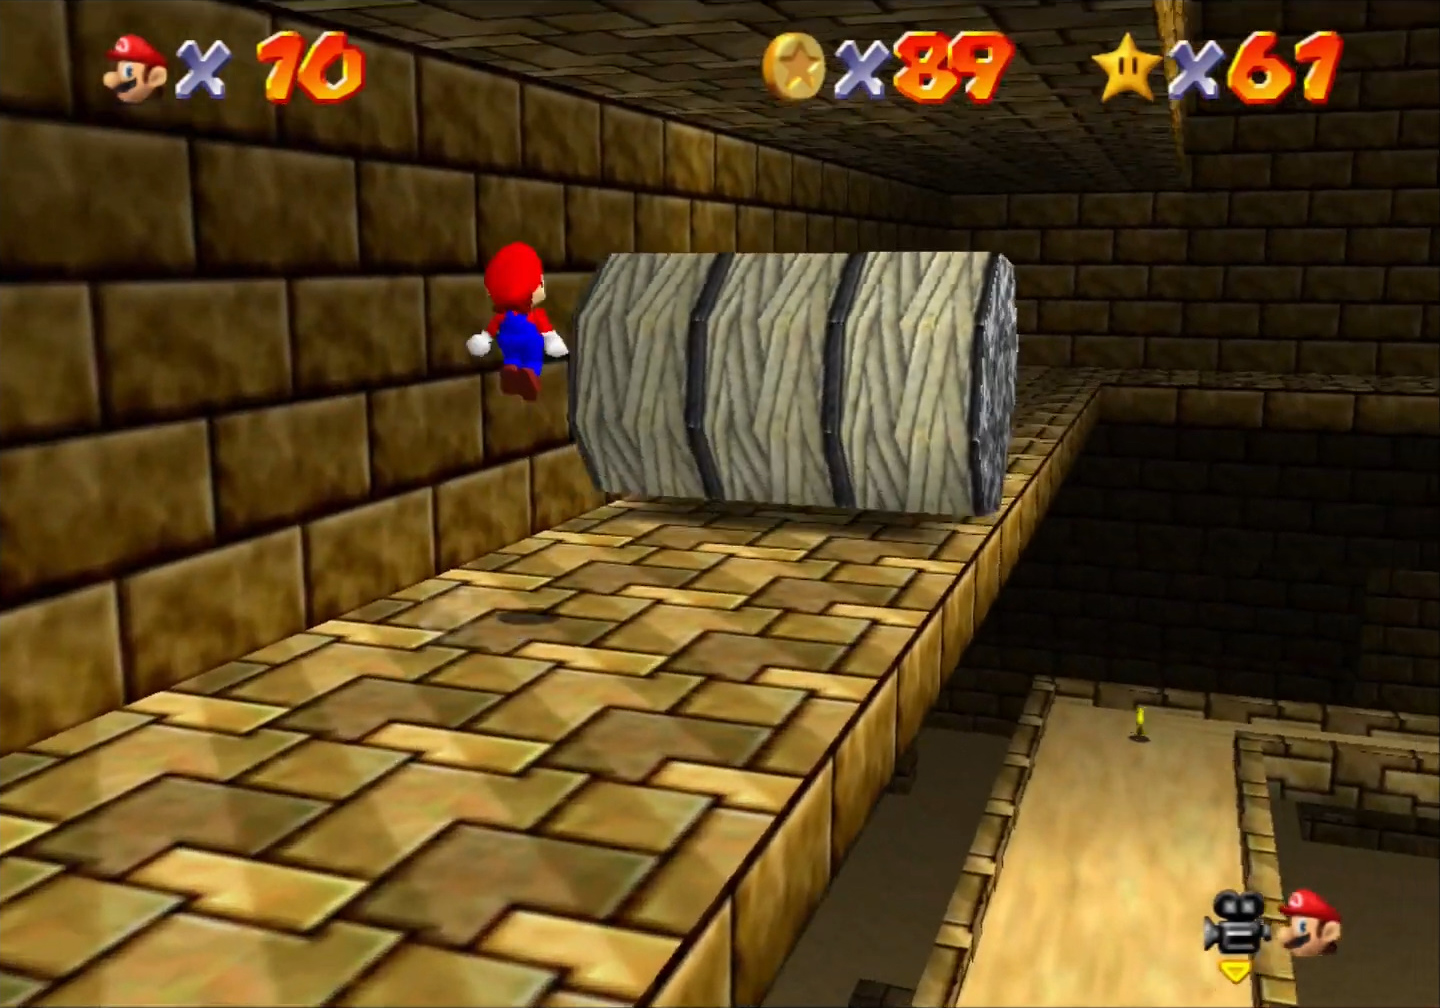 Super Mario 64 - 3. Inside the Ancient Pyramid - Shifting Sand Land 3.